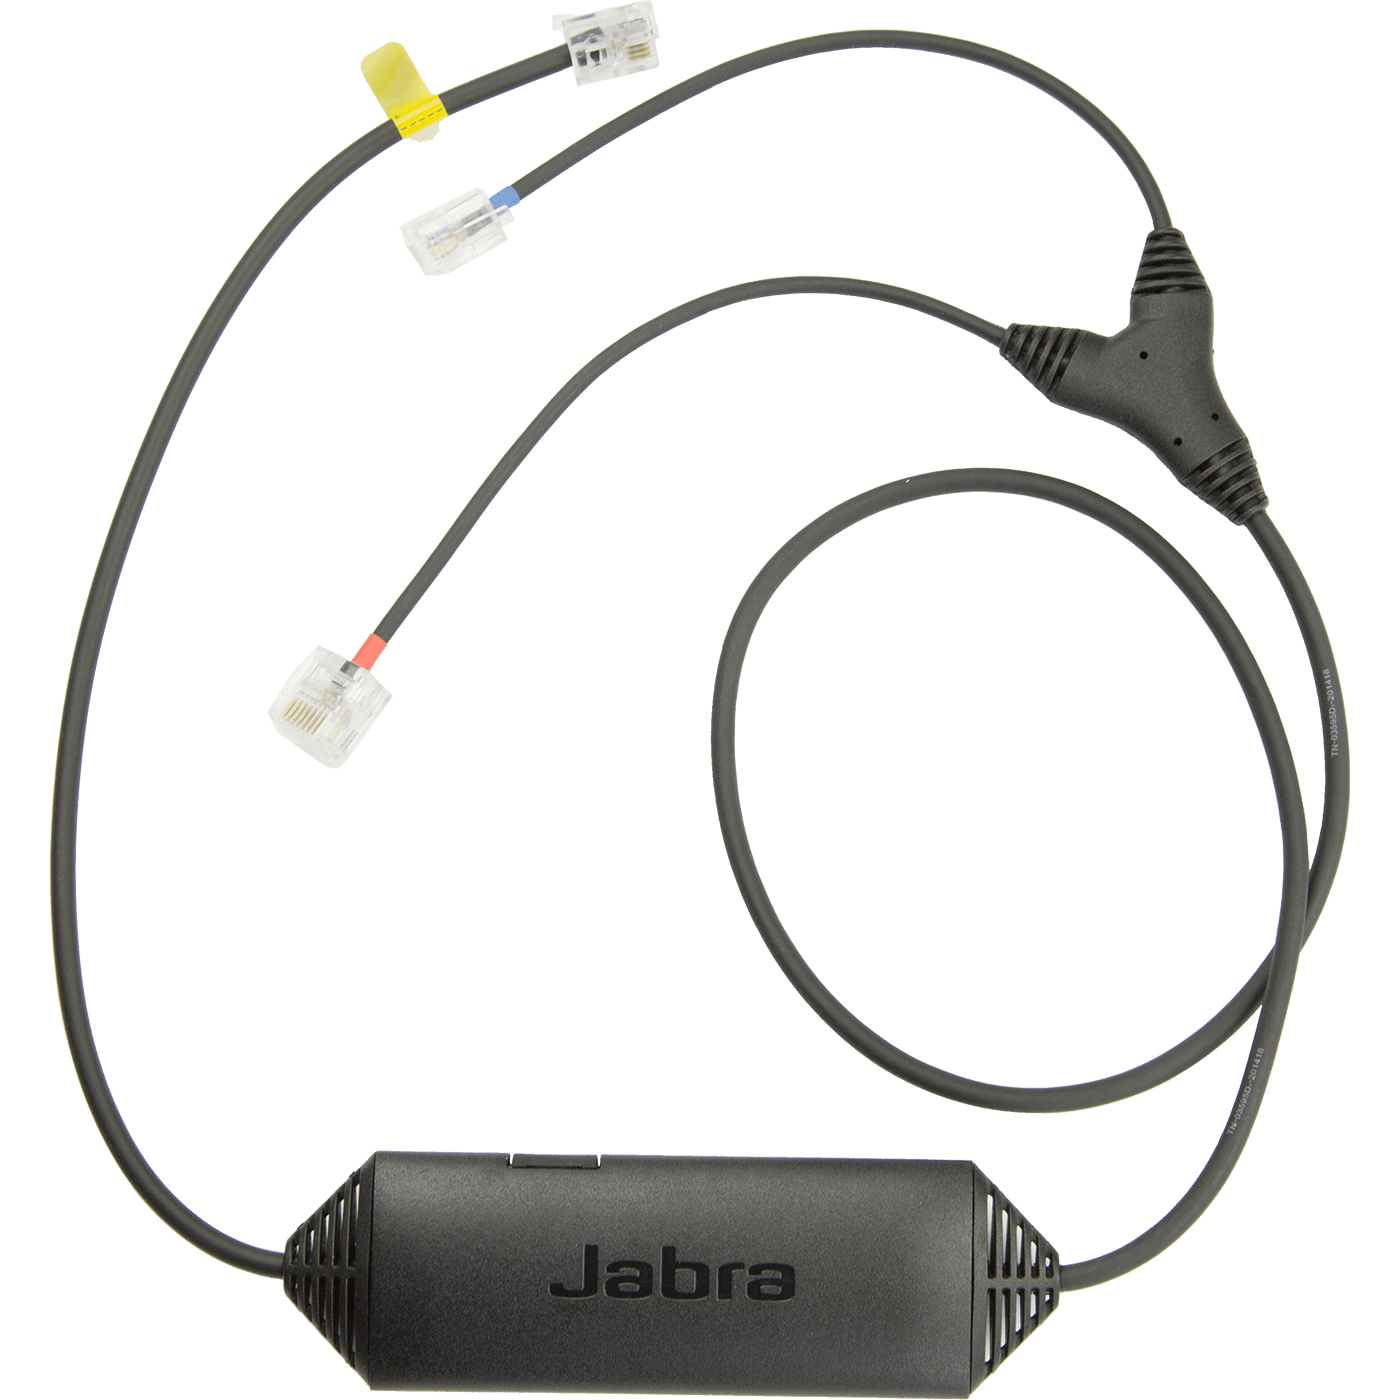 Photos - Portable Audio Accessories Jabra LINK 14201-41 